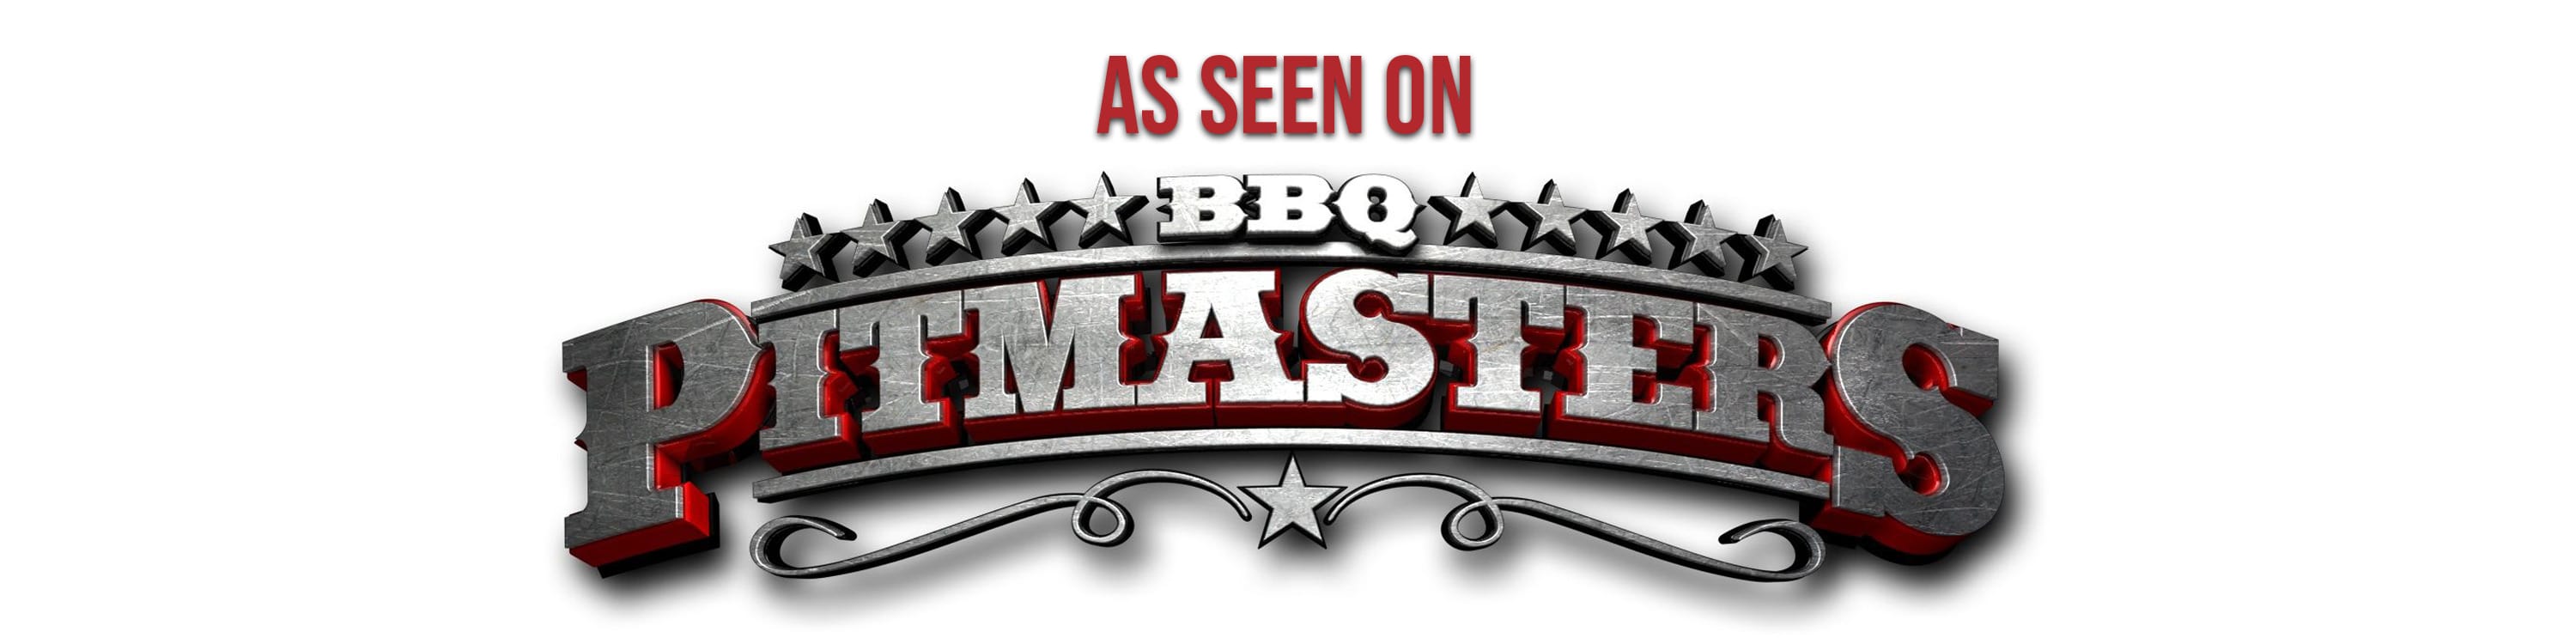 Logo for Pitmaster TV show